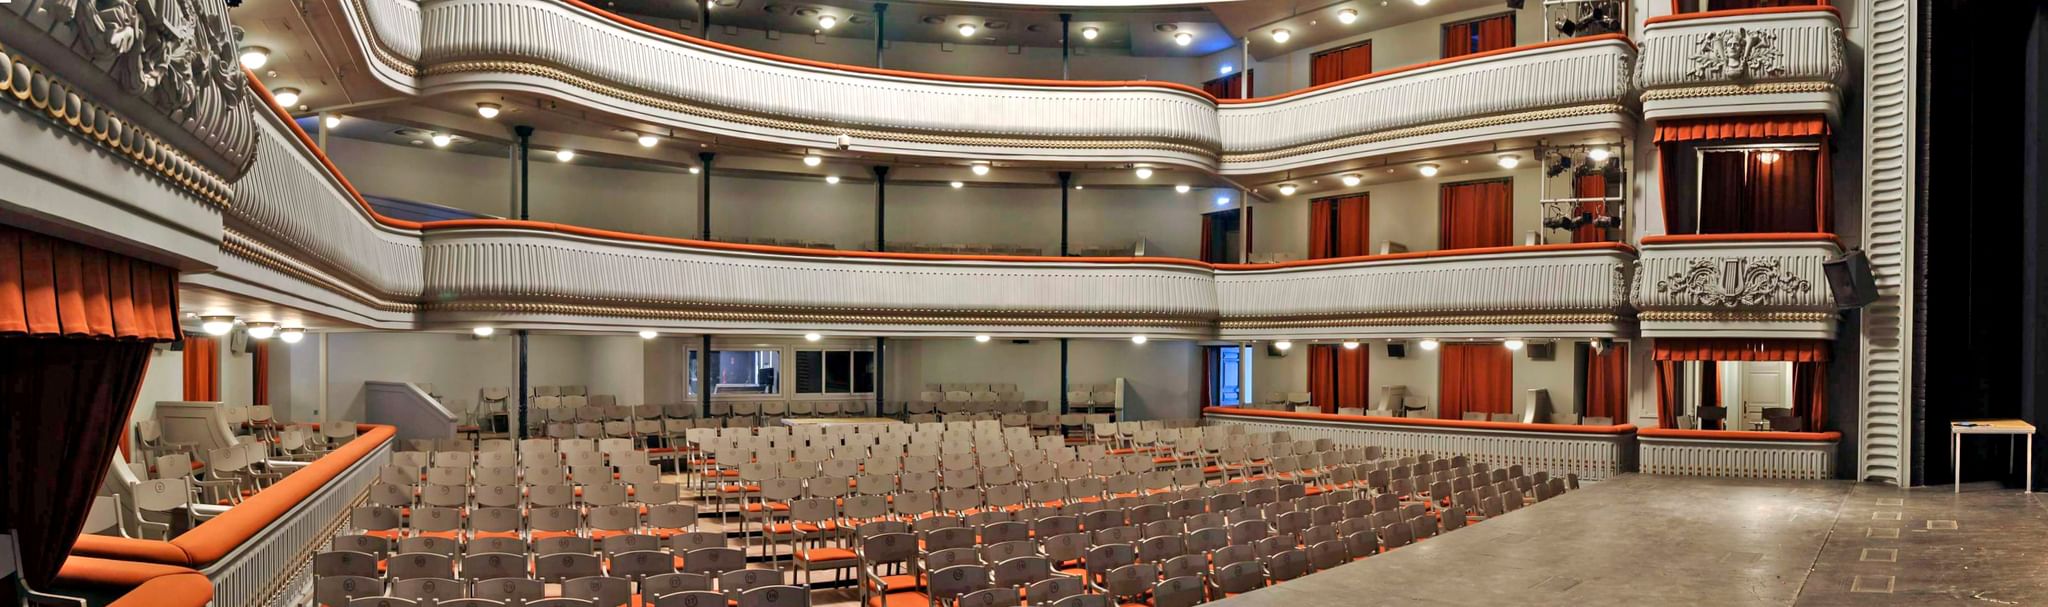 театр луначарского зал